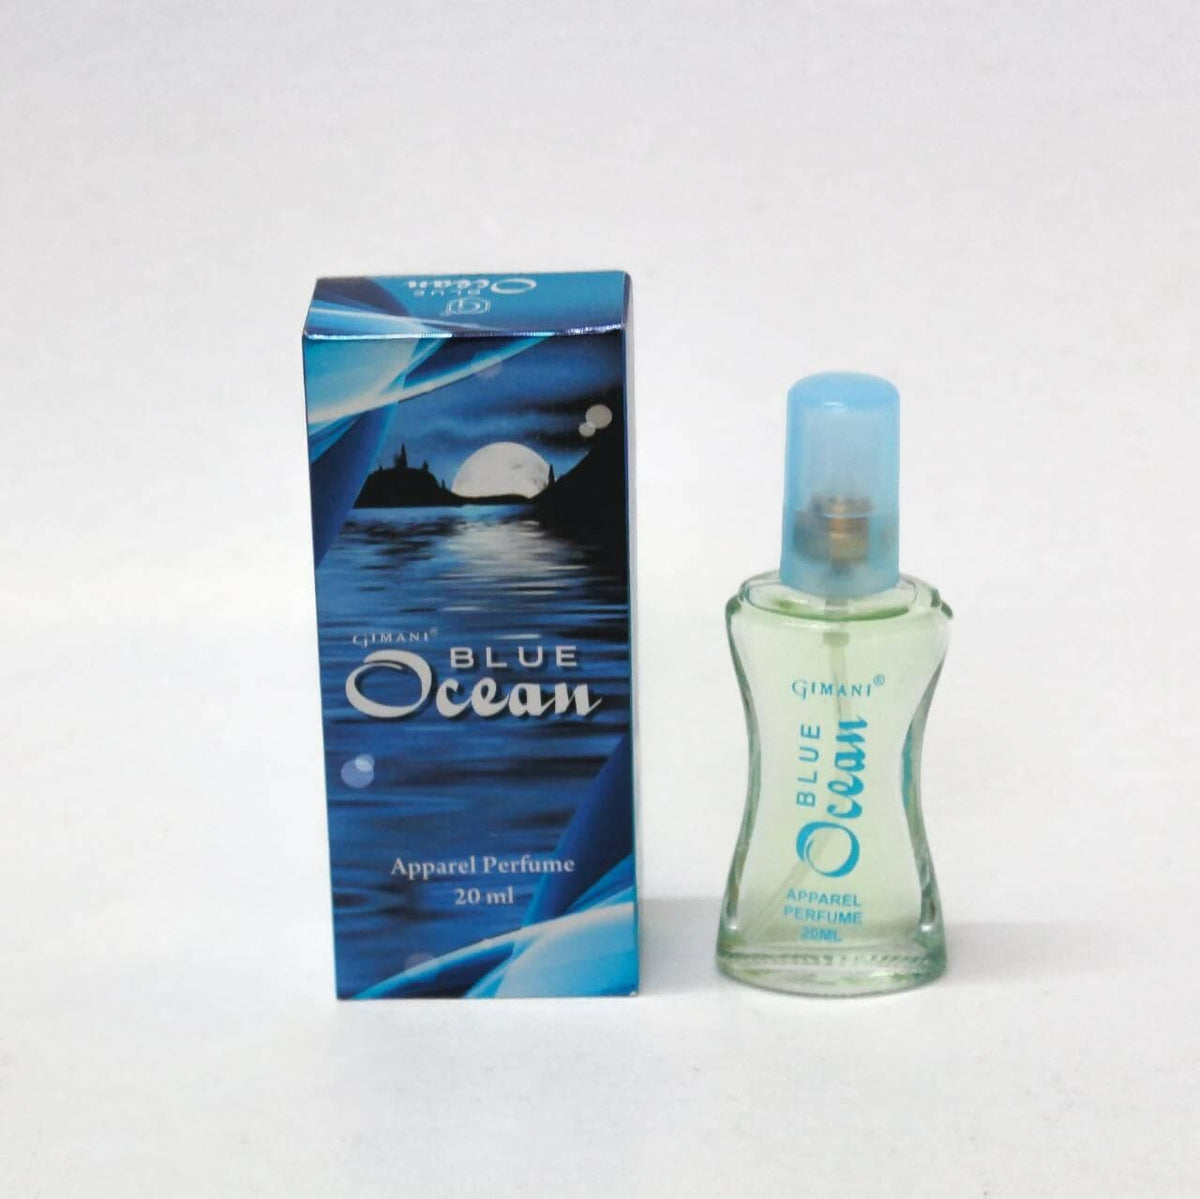 Gimani blue ocean unisex perfume (20ml, pack of 2) - HalfPe